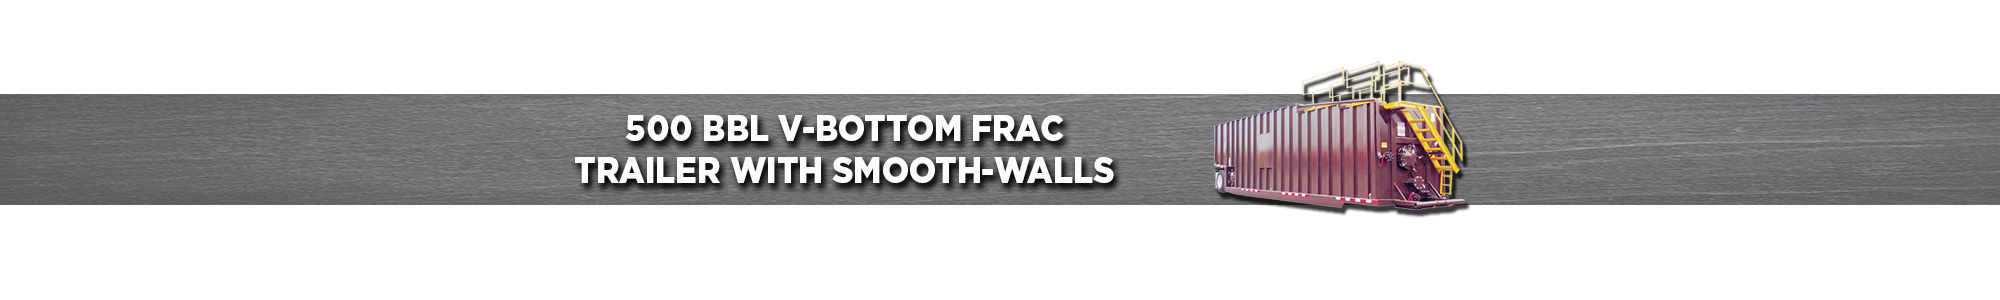 500 BBL V-Bottom Frac Trailer with Smooth-Walls